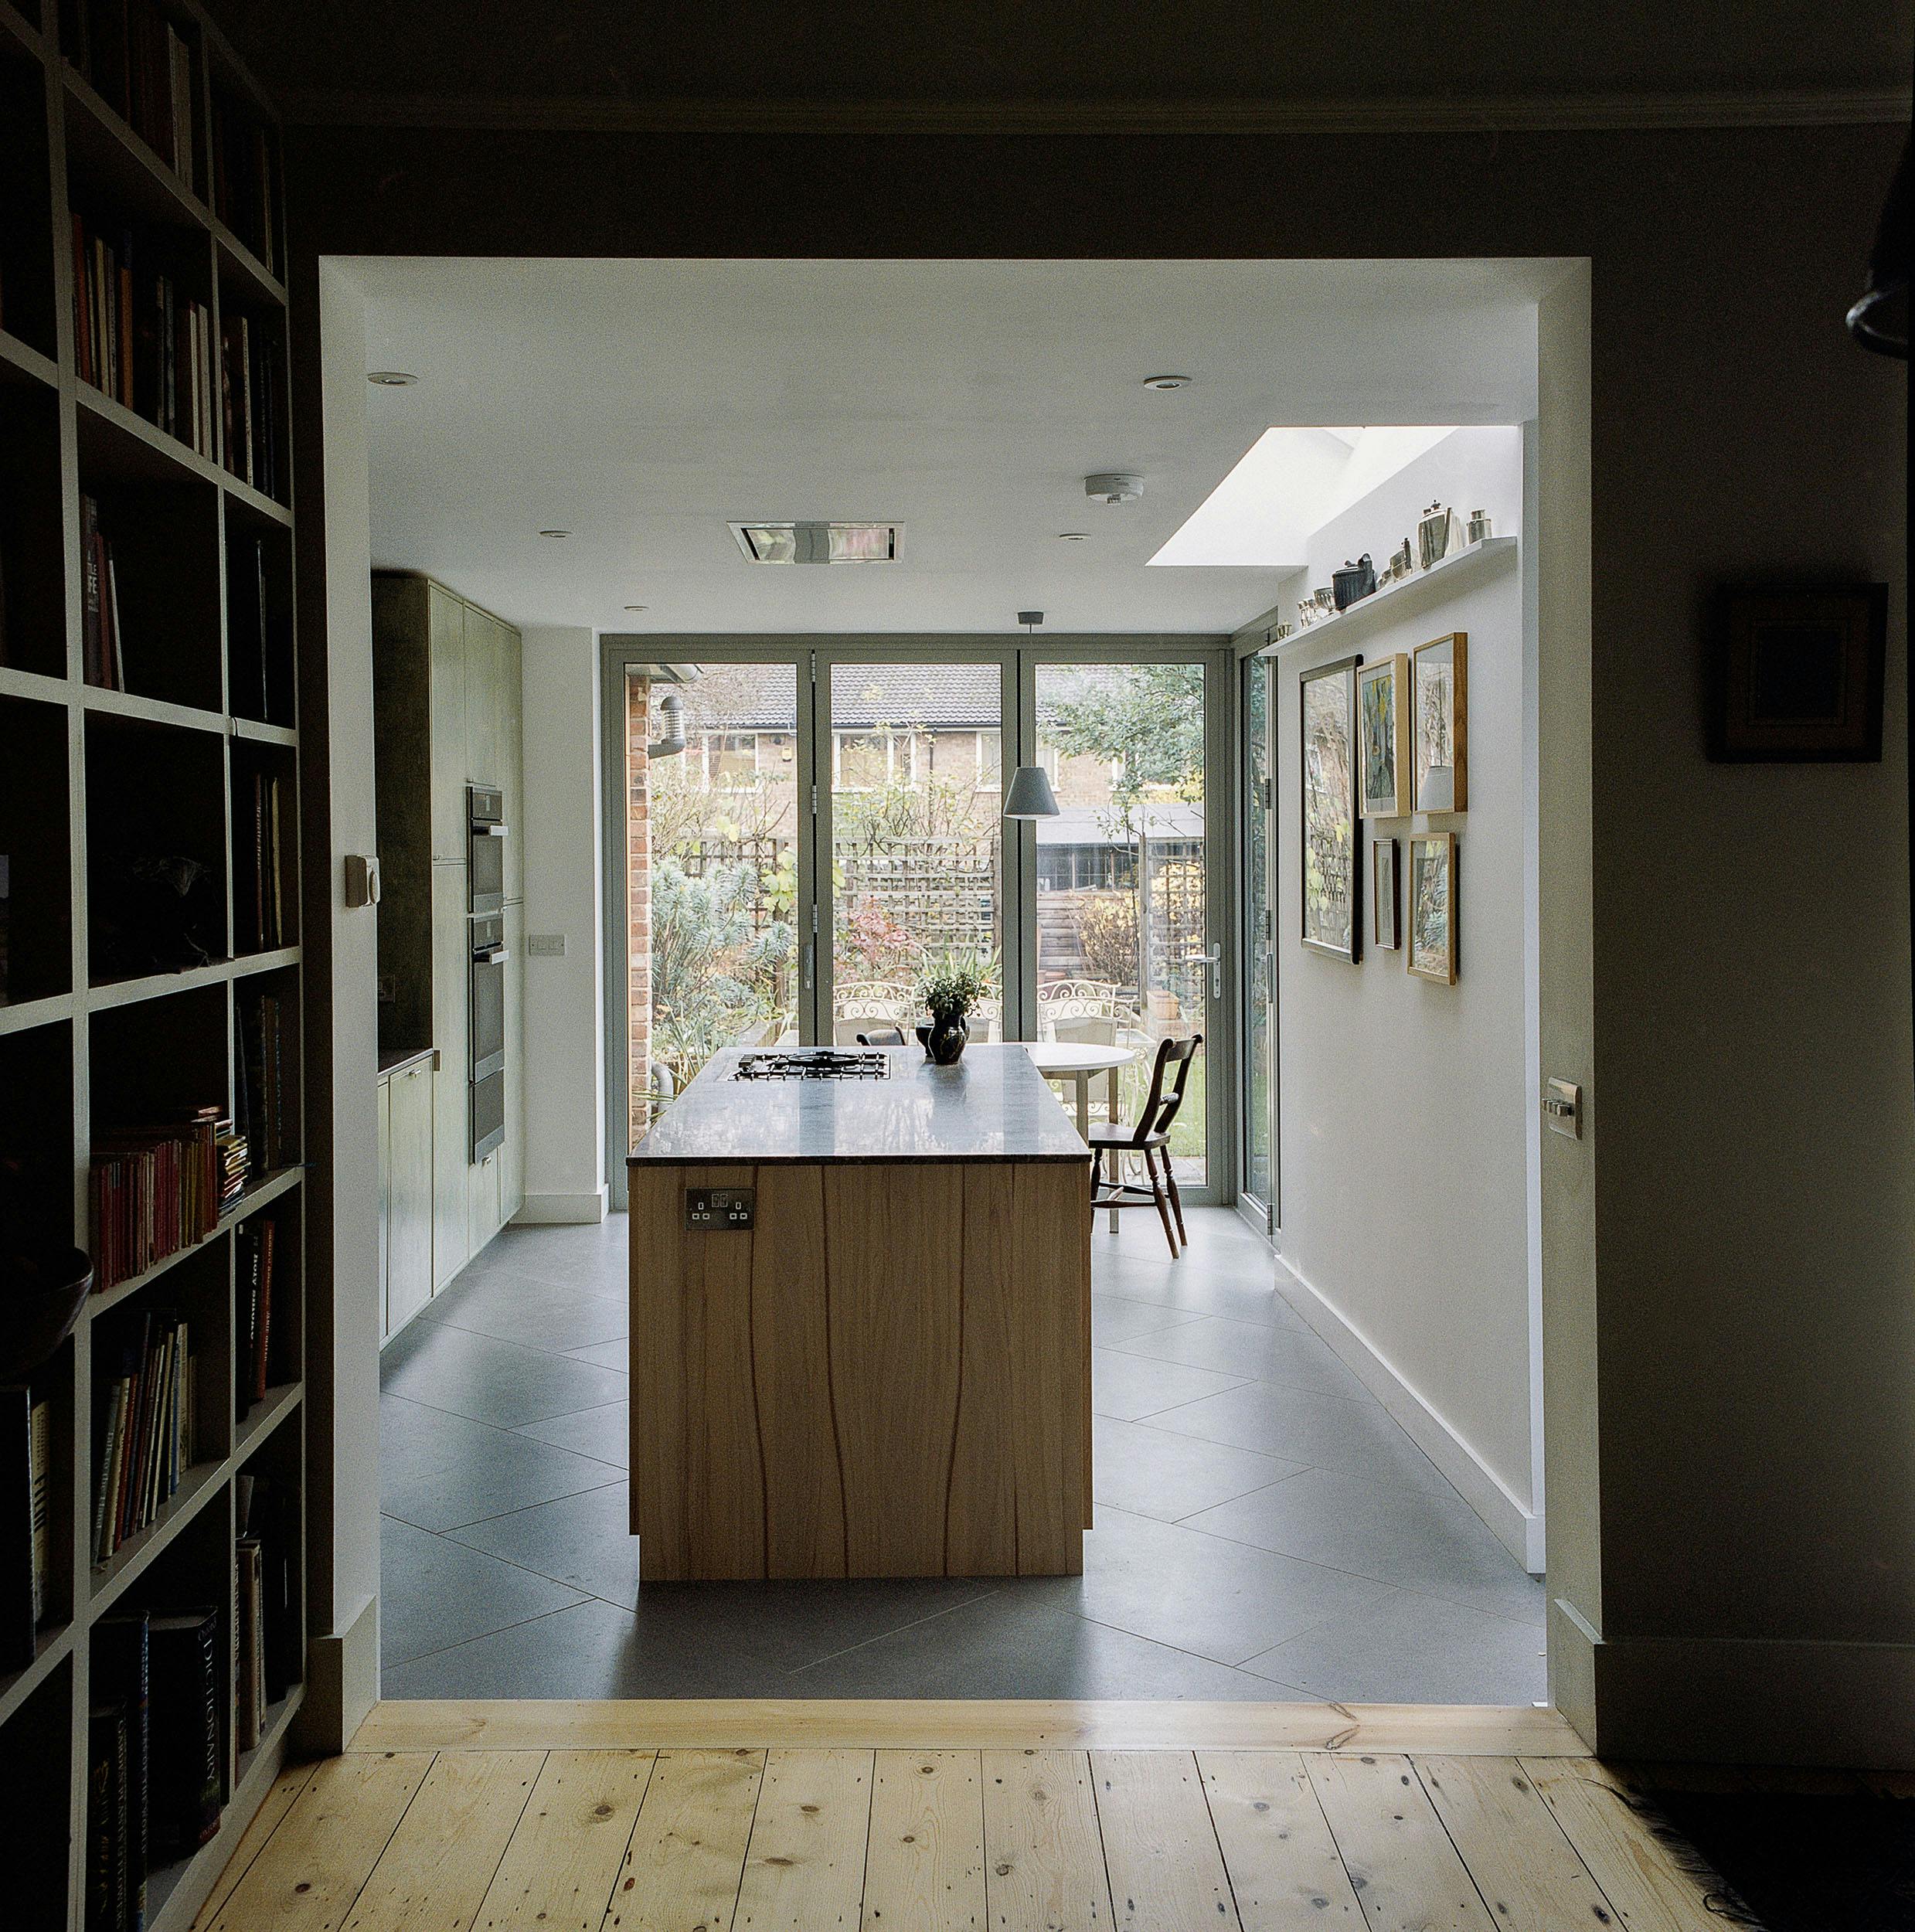 Contemporary wooden Ma-kon kitchen with limestone worktop in Sheffield.